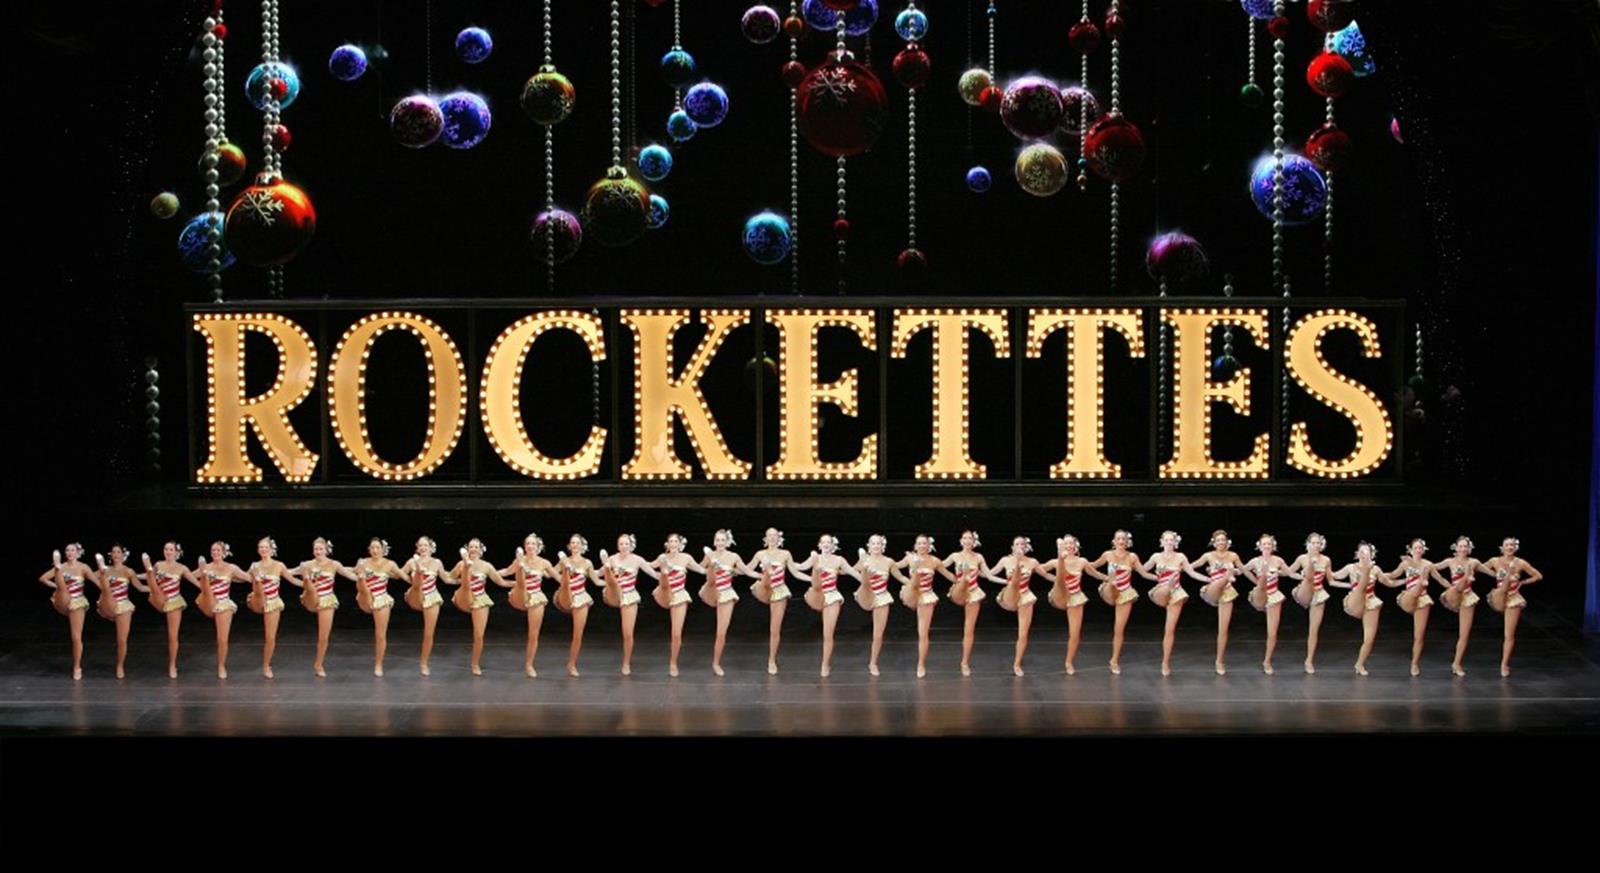 The Radio City Christmas Spectacular Starring The Rockettes 11/10/06 Credit Photo: Paul Kolnik for MSG Entertainment NYC 212.362.7778 studio@paulkolnik.com